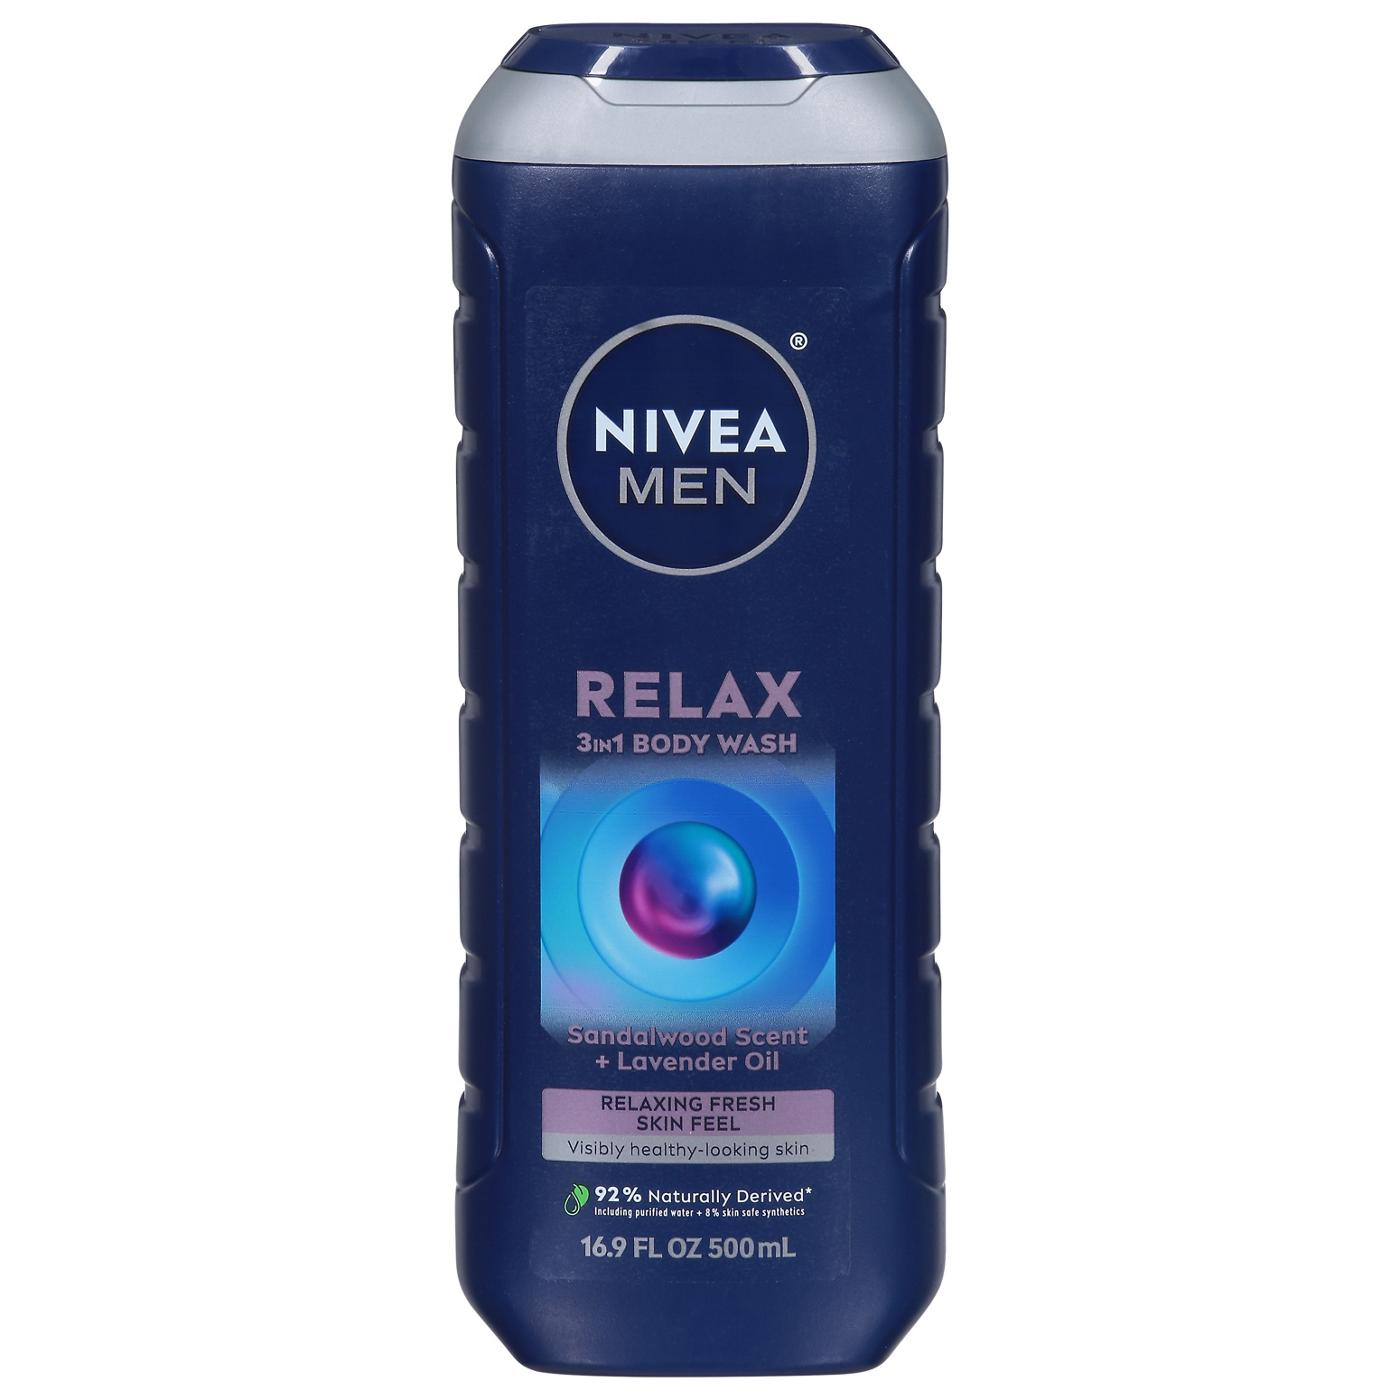 NIVEA Men Relax 3-In-1 Body Wash - Sandalwood Scent + Lavender Oil ; image 1 of 2